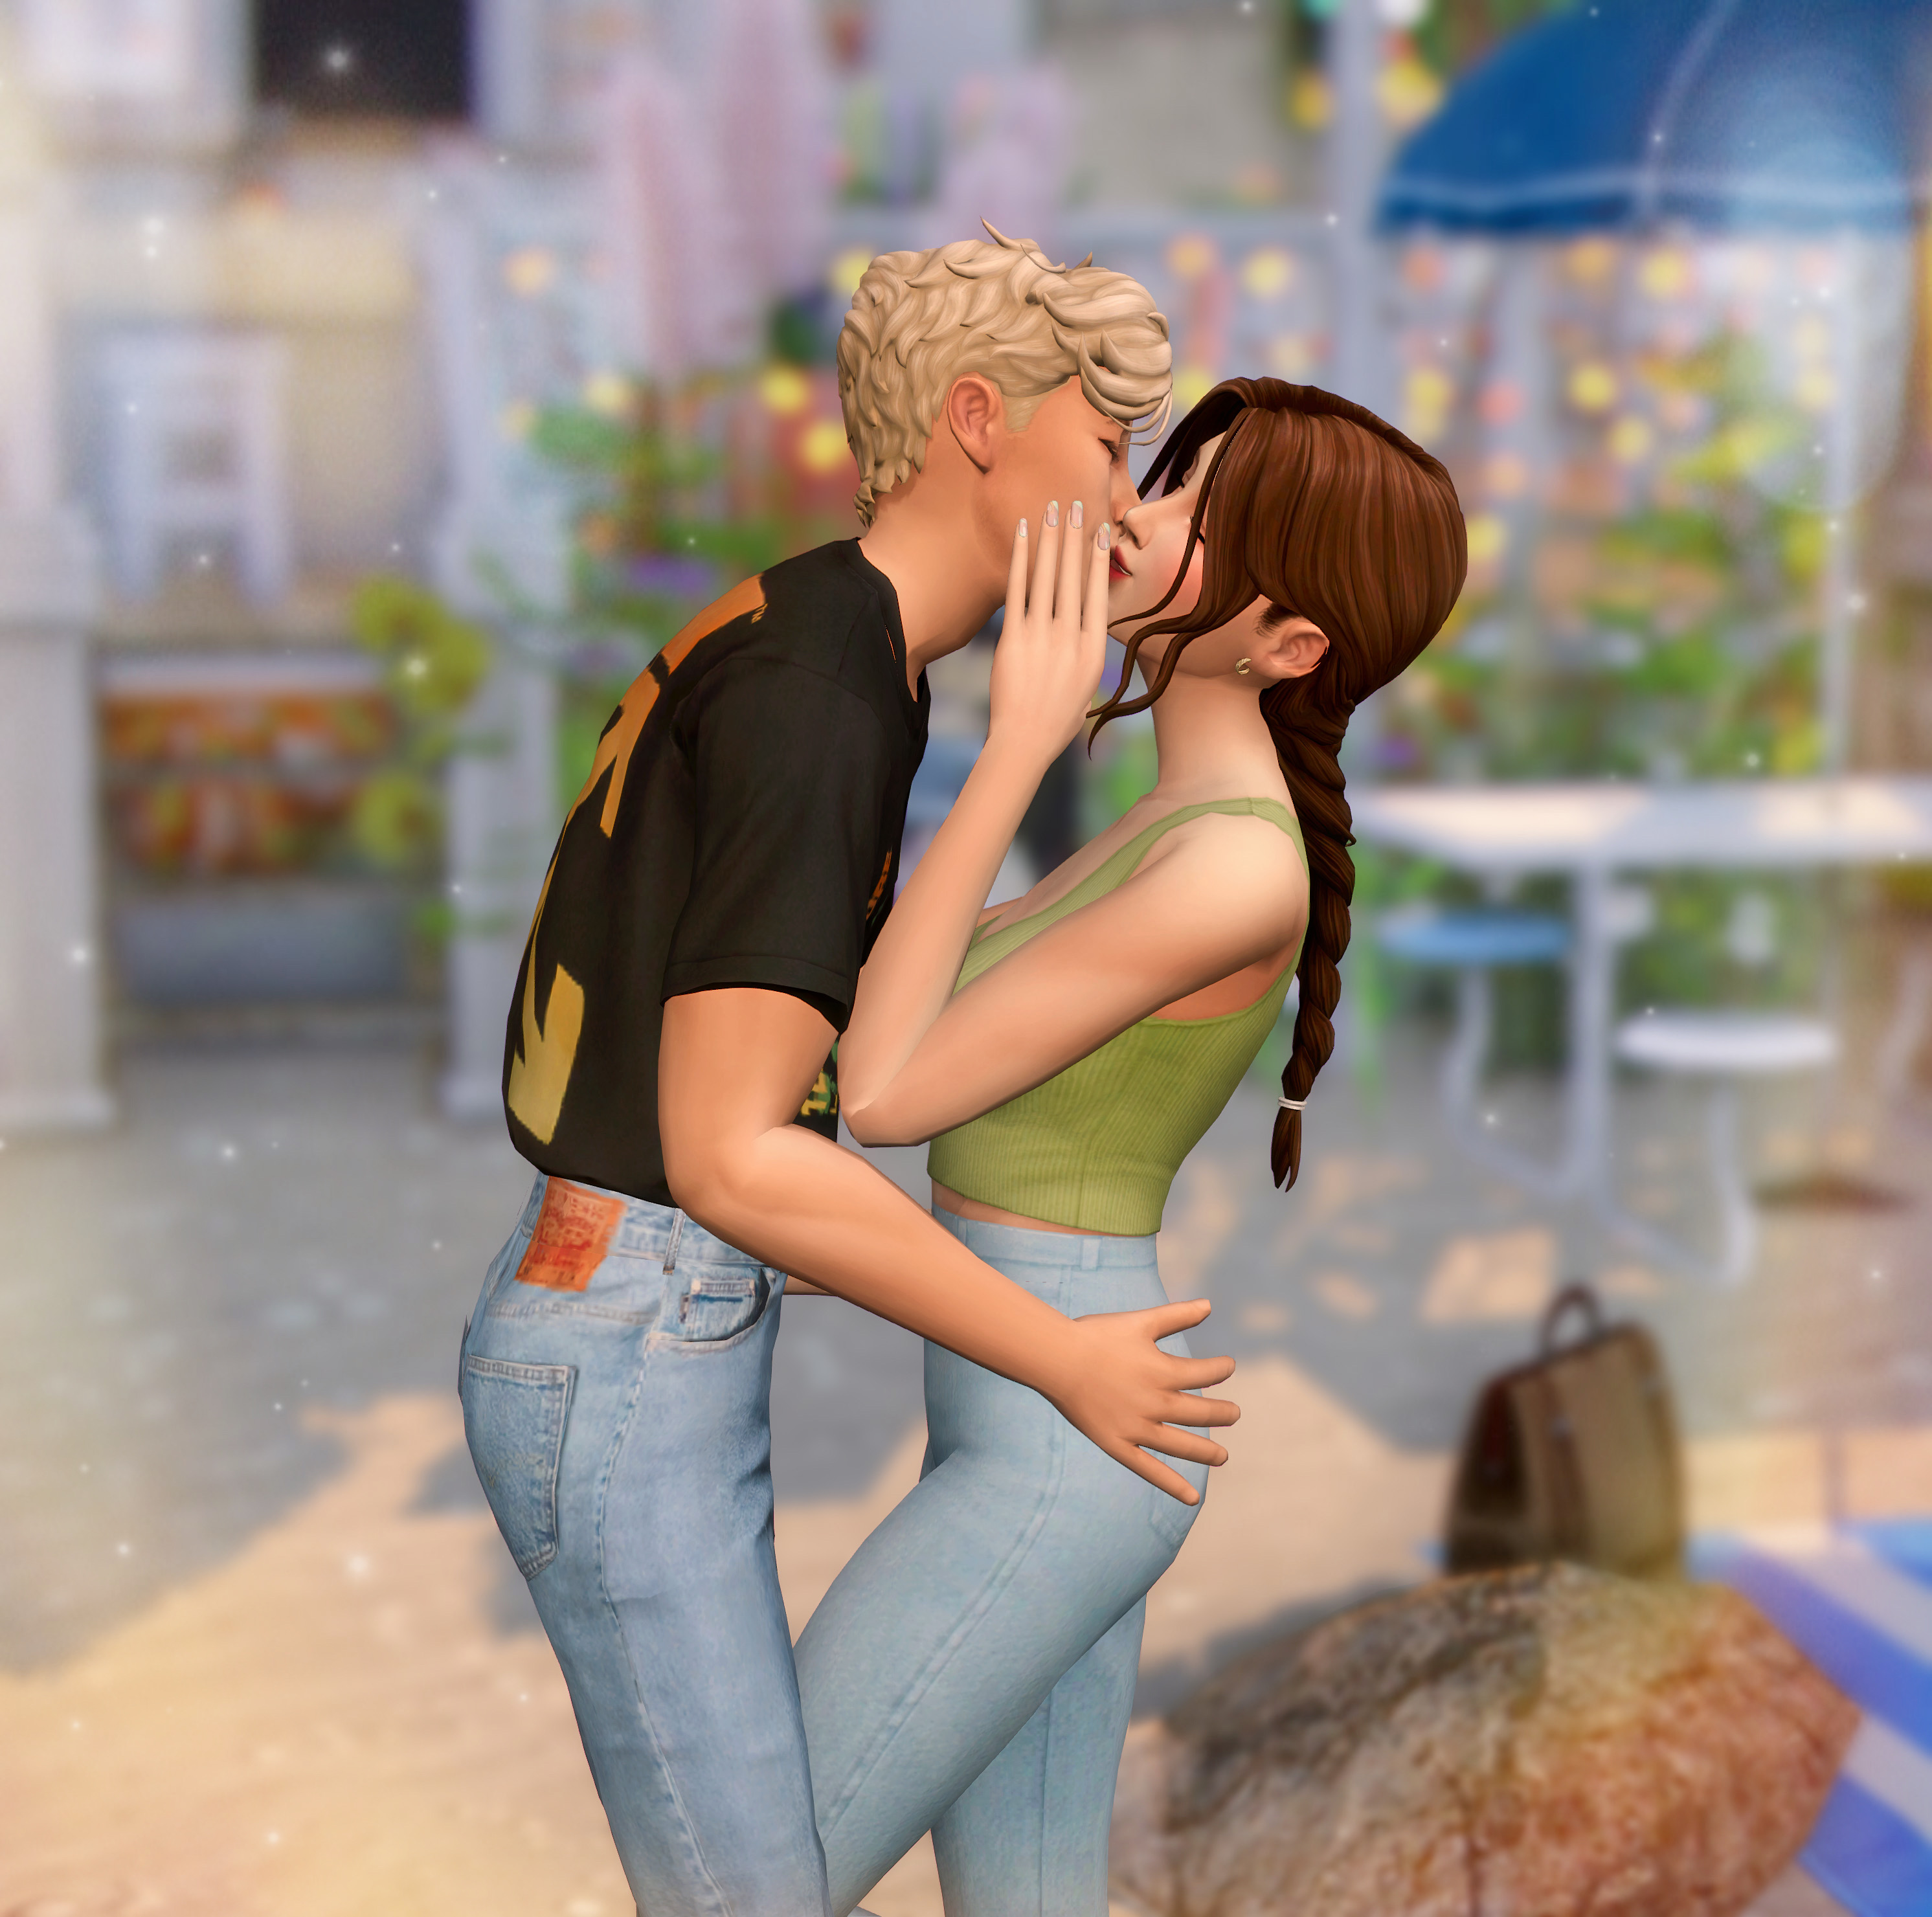 Raspberrywhimss Sweet Like Cinnamon Pose Pack Screenshots The Sims 4 Mods Curseforge